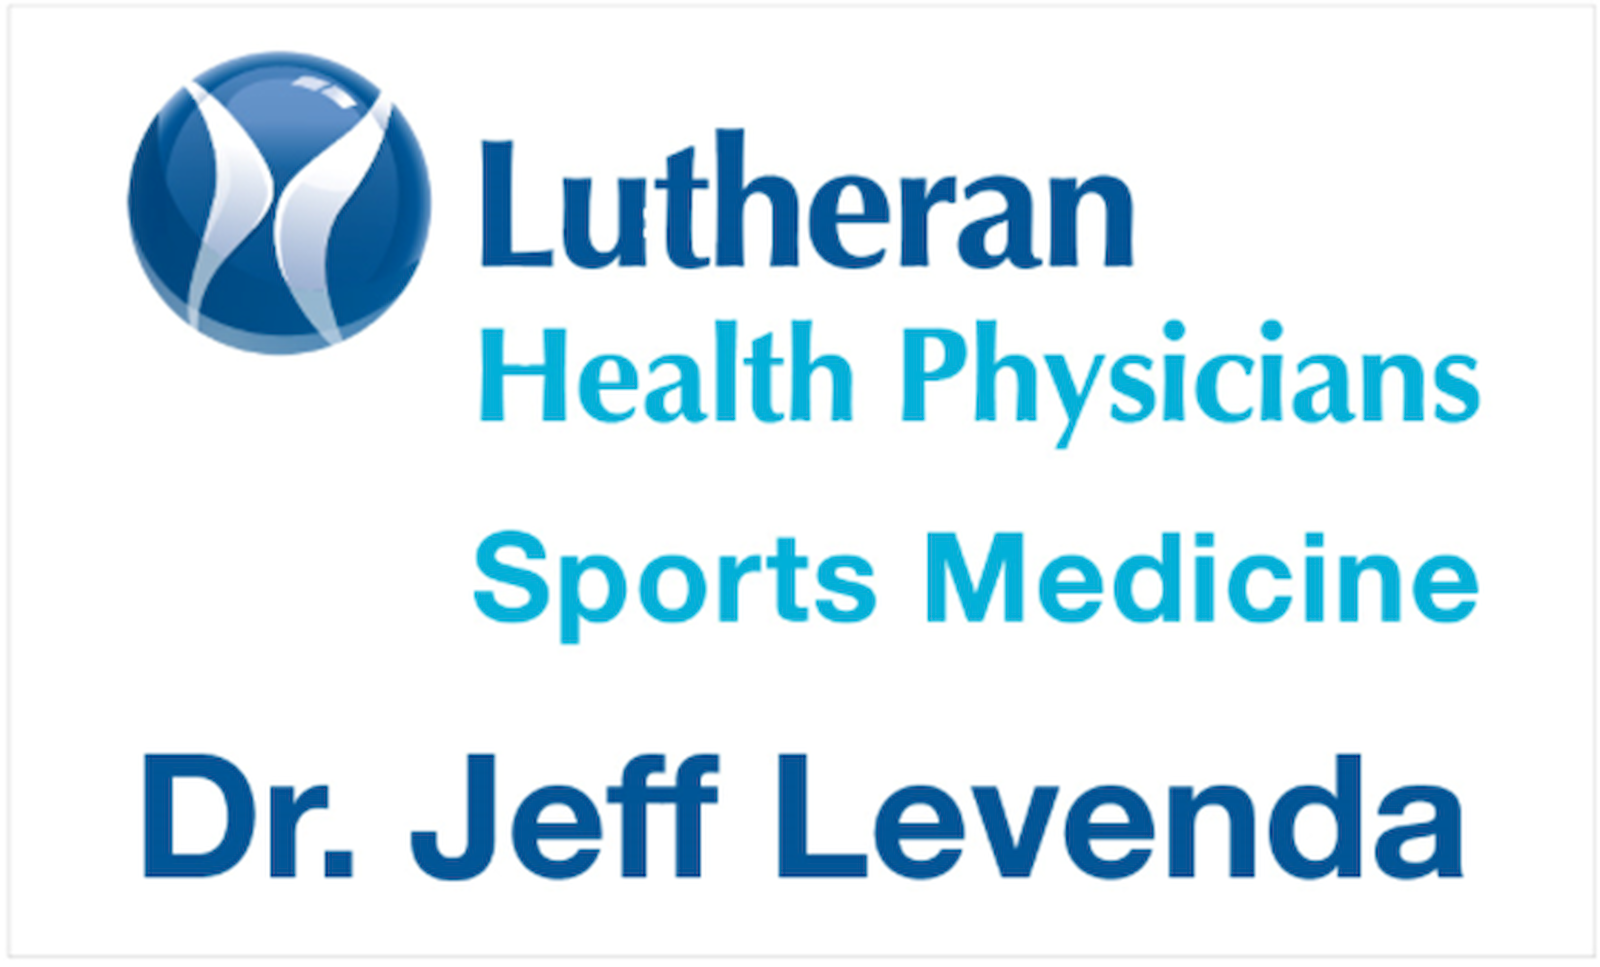 DR. JEFF LEVENDA - LUTHERAN SPORTS MEDICINE